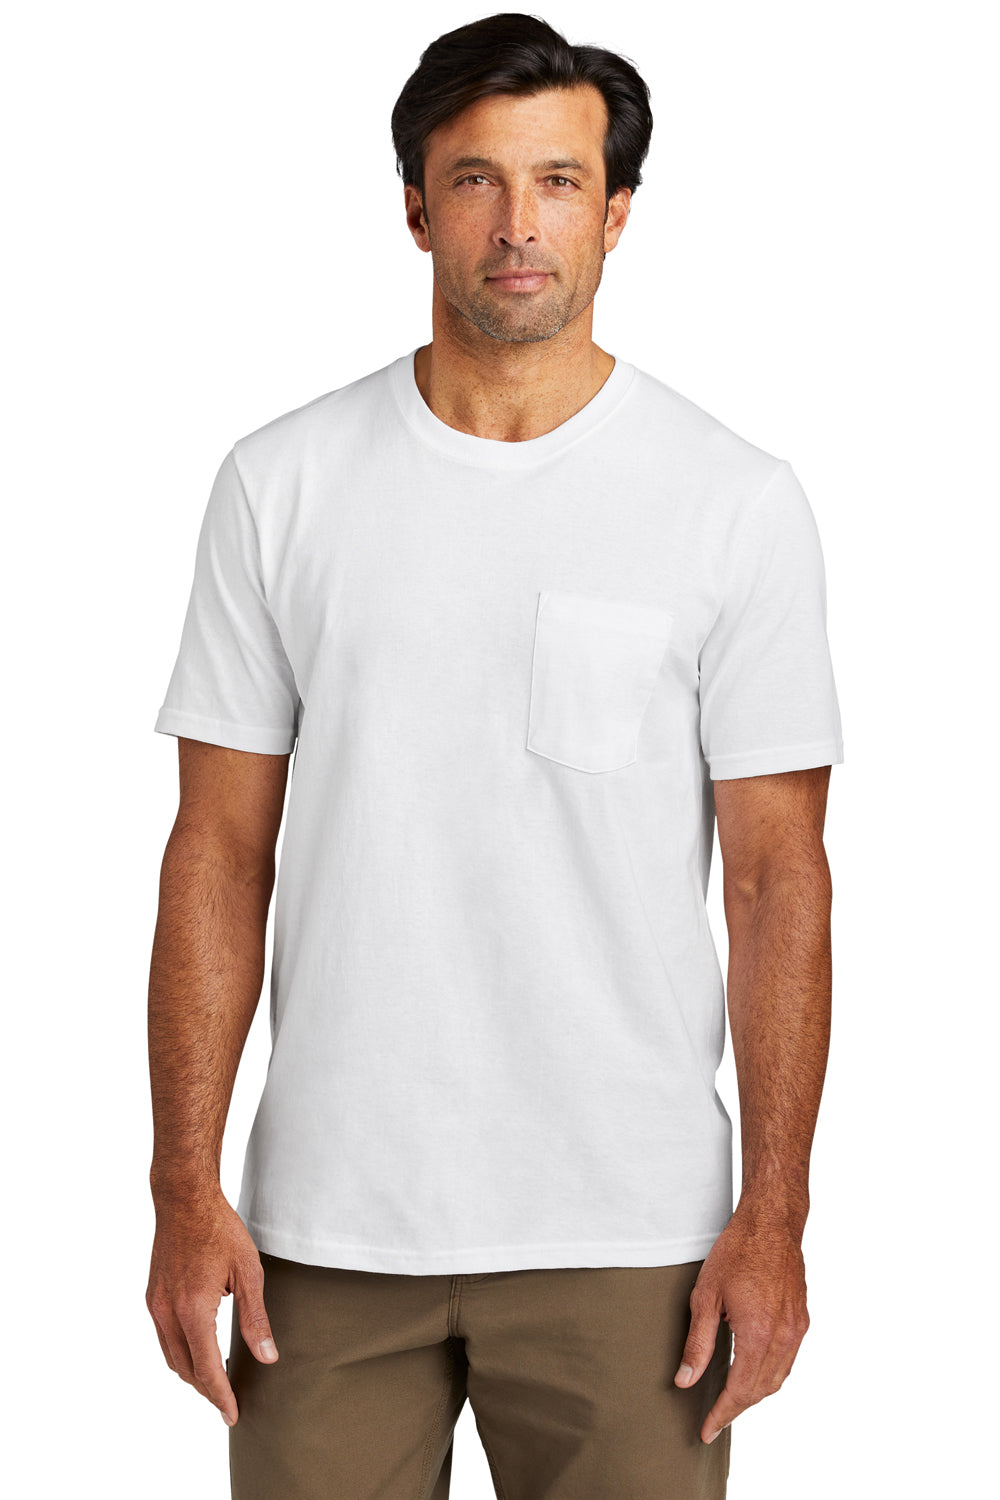 Volunteer Knitwear VL100P USA Made All American Short Sleeve Crewneck T-Shirt w/ Pocket White Front